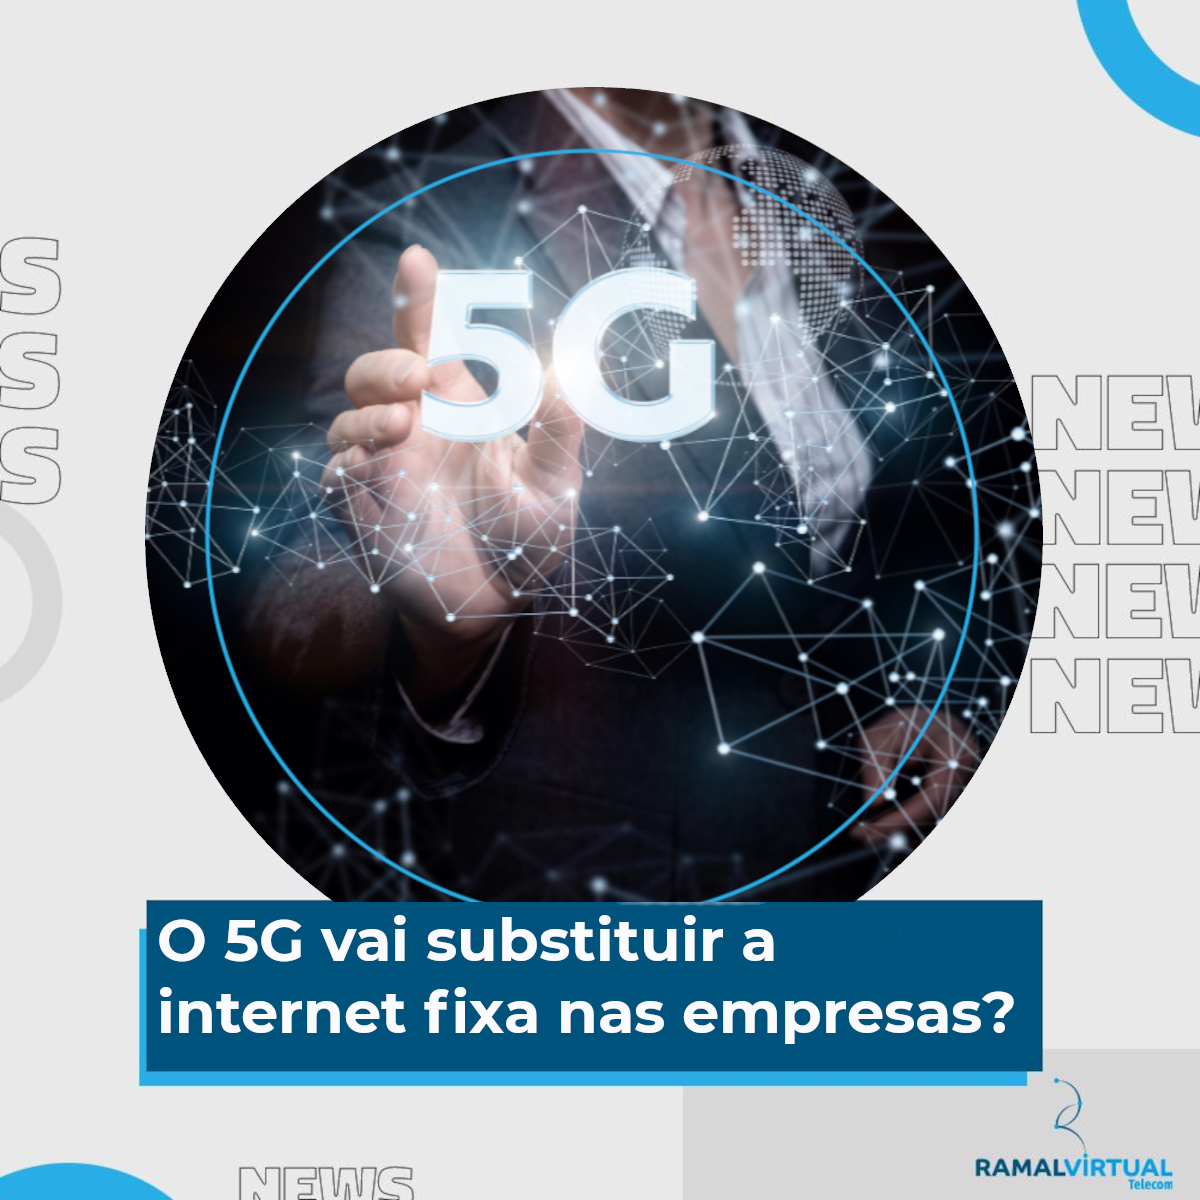 [O 5G vai substituir a internet fixa nas empresas?]